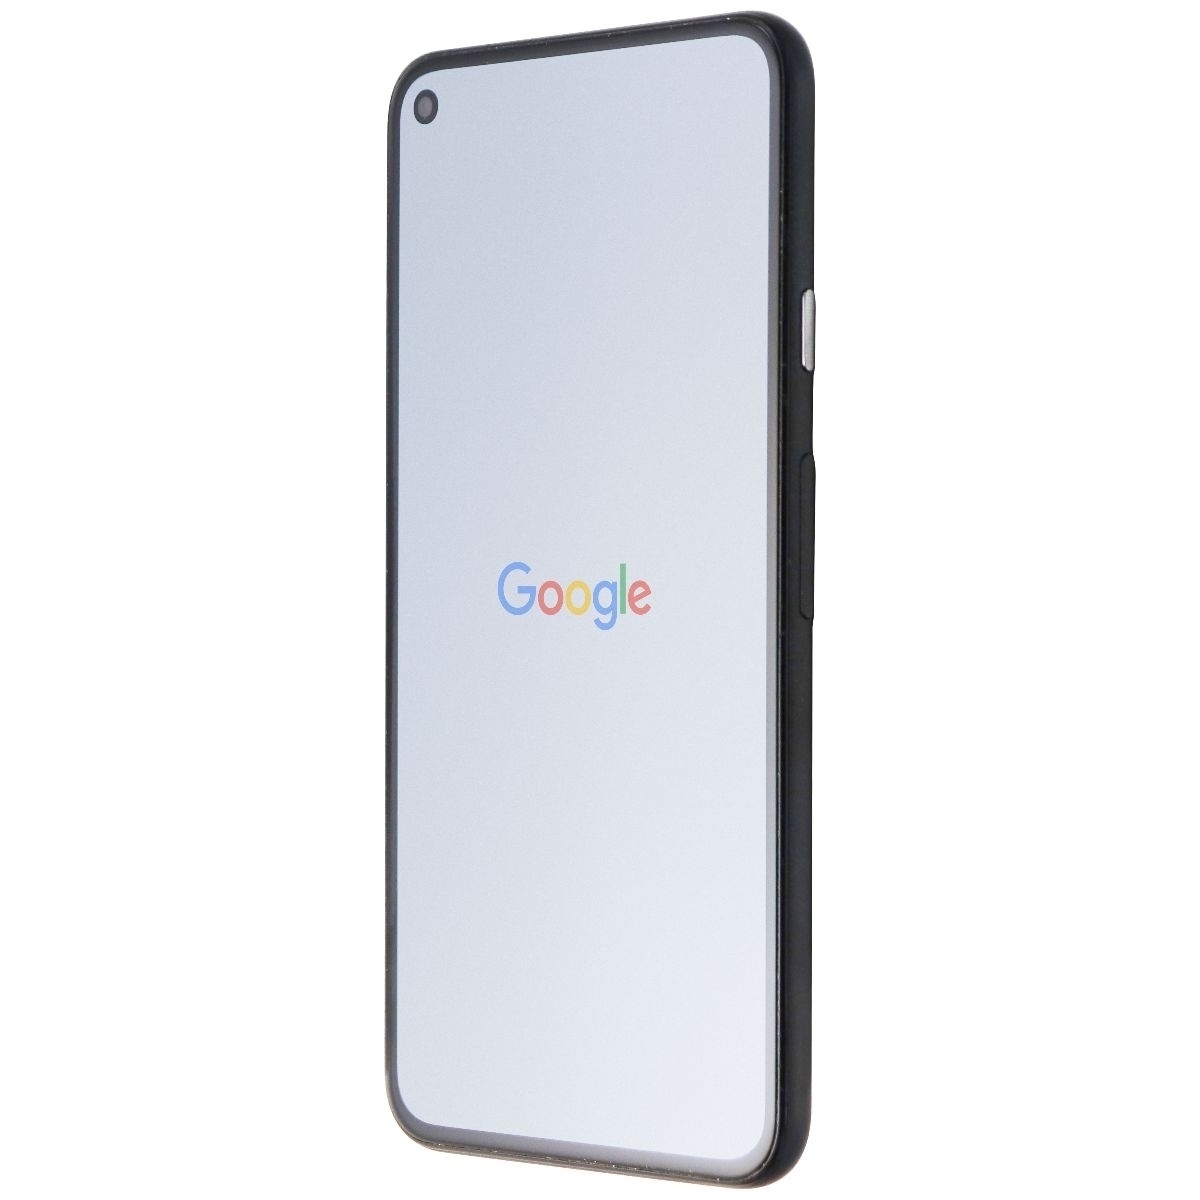 Google Pixel 5 (6.0-inch) Smartphone (GD1YQ) Verizon ONLY - 128GB / Just Black (Refurbished)